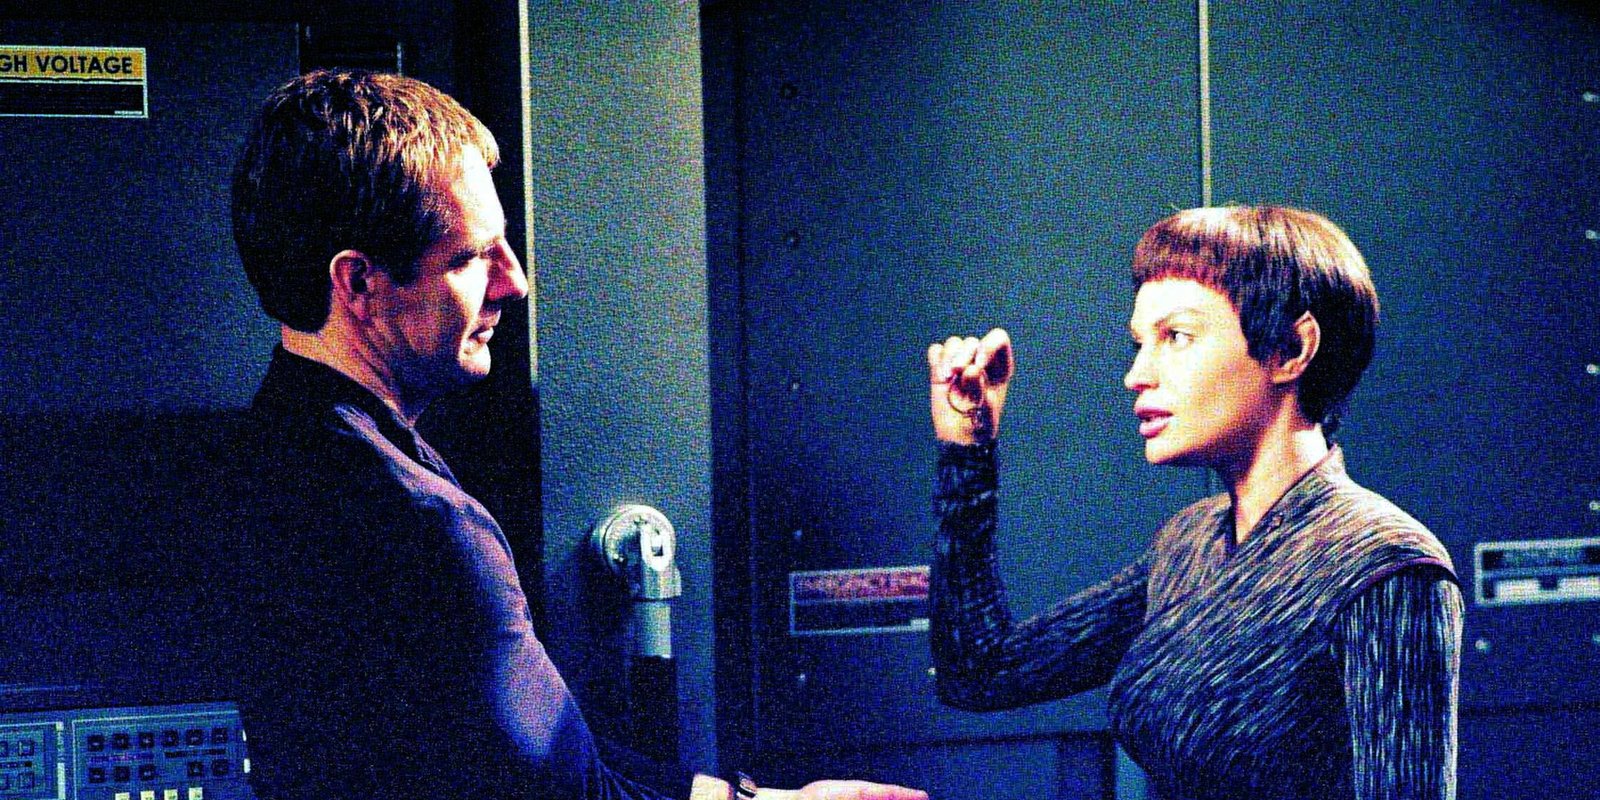 Star Trek - Enterprise - Staffel 3